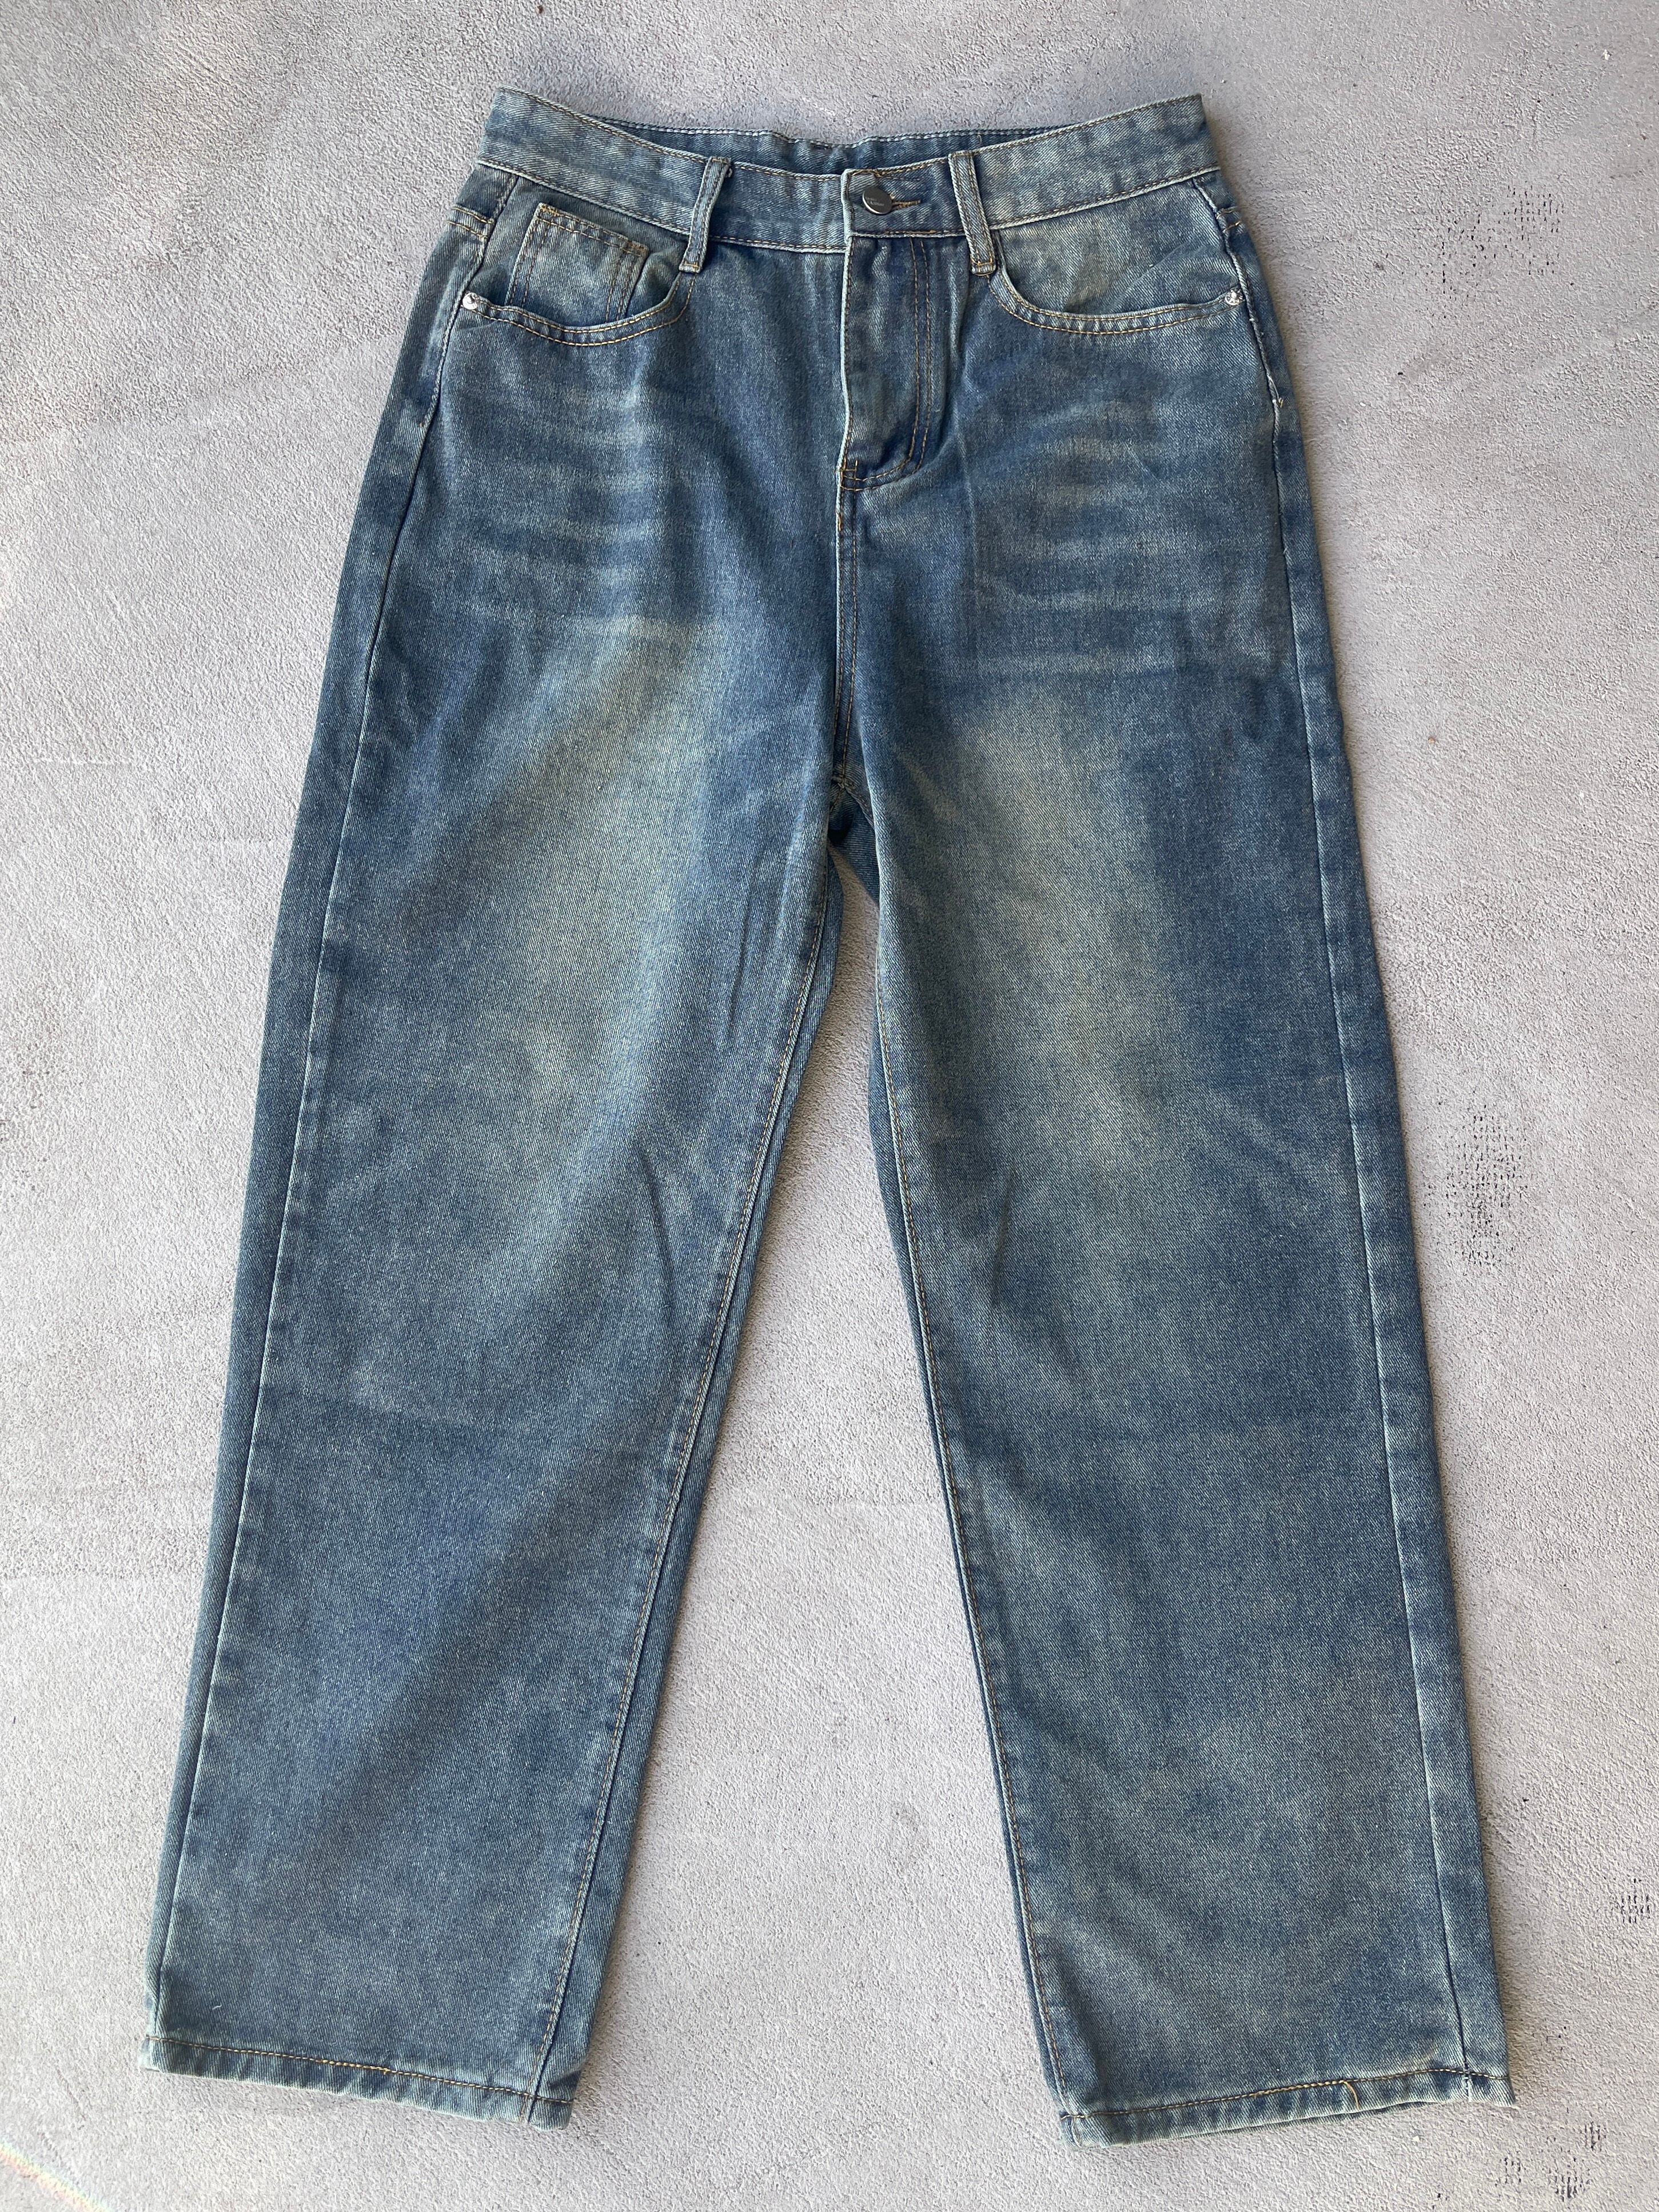 Vintage 2000s Japanese Americana Worker Denim Jeans - 2